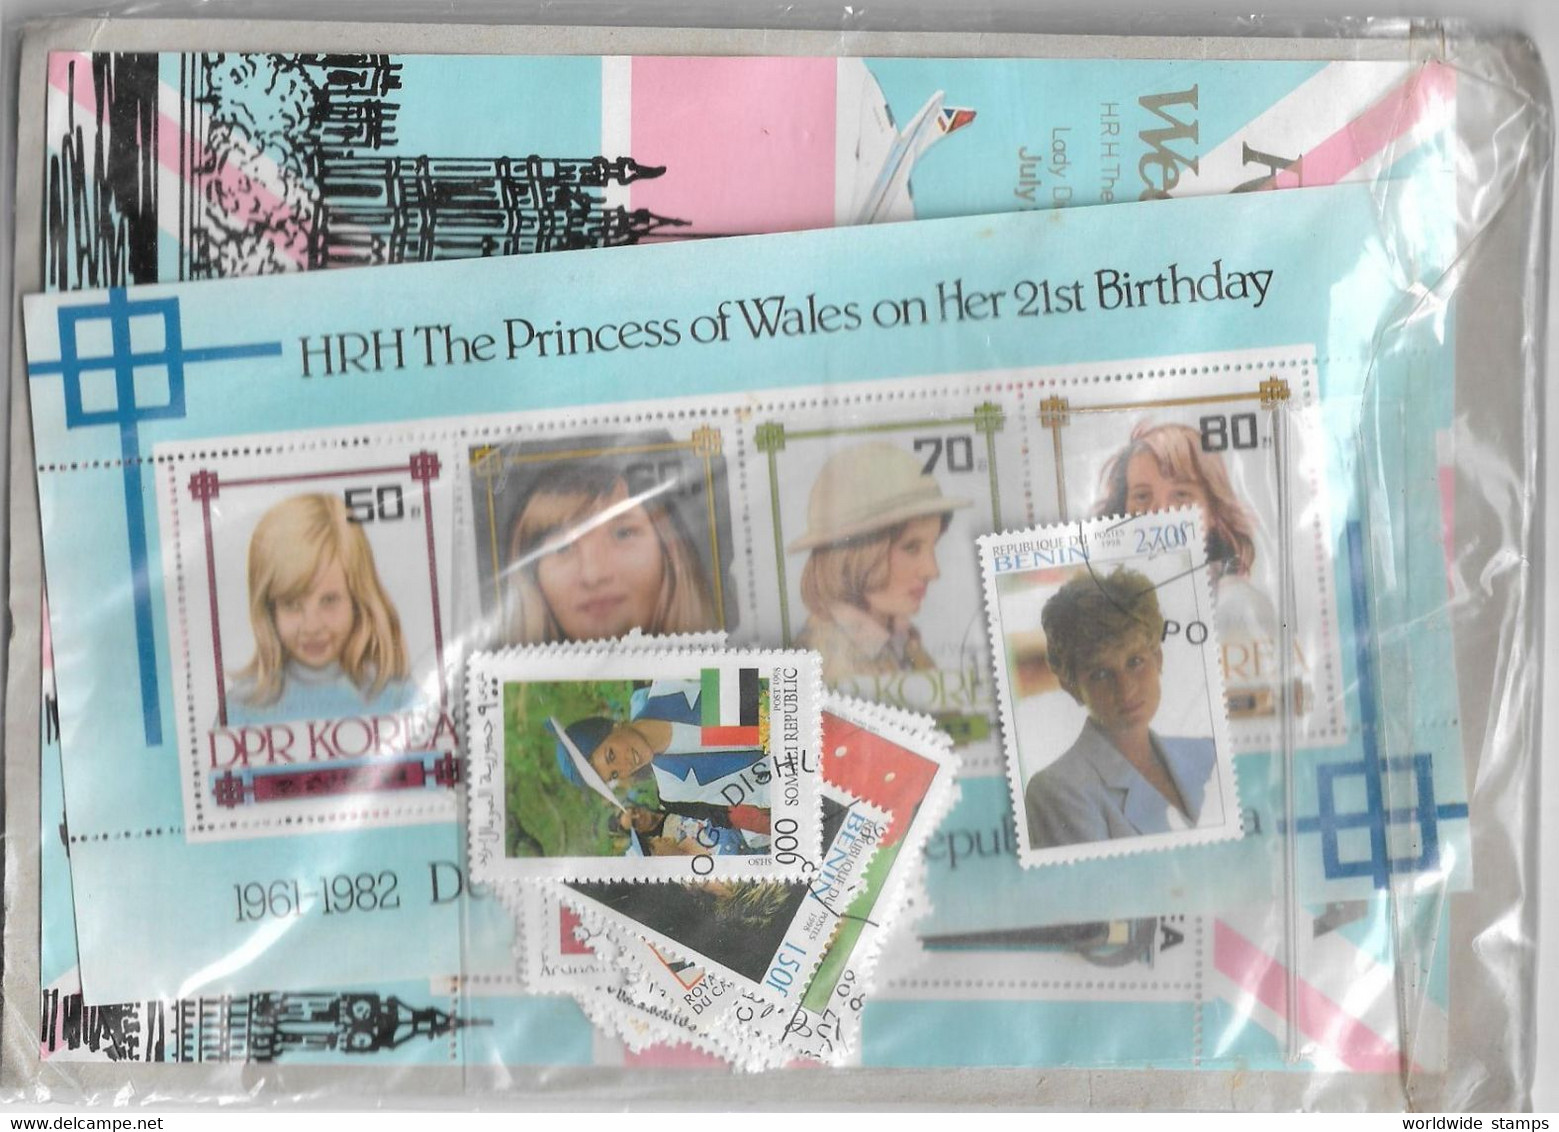 Great Britain  Lady Diana Stamps - Ongebruikt